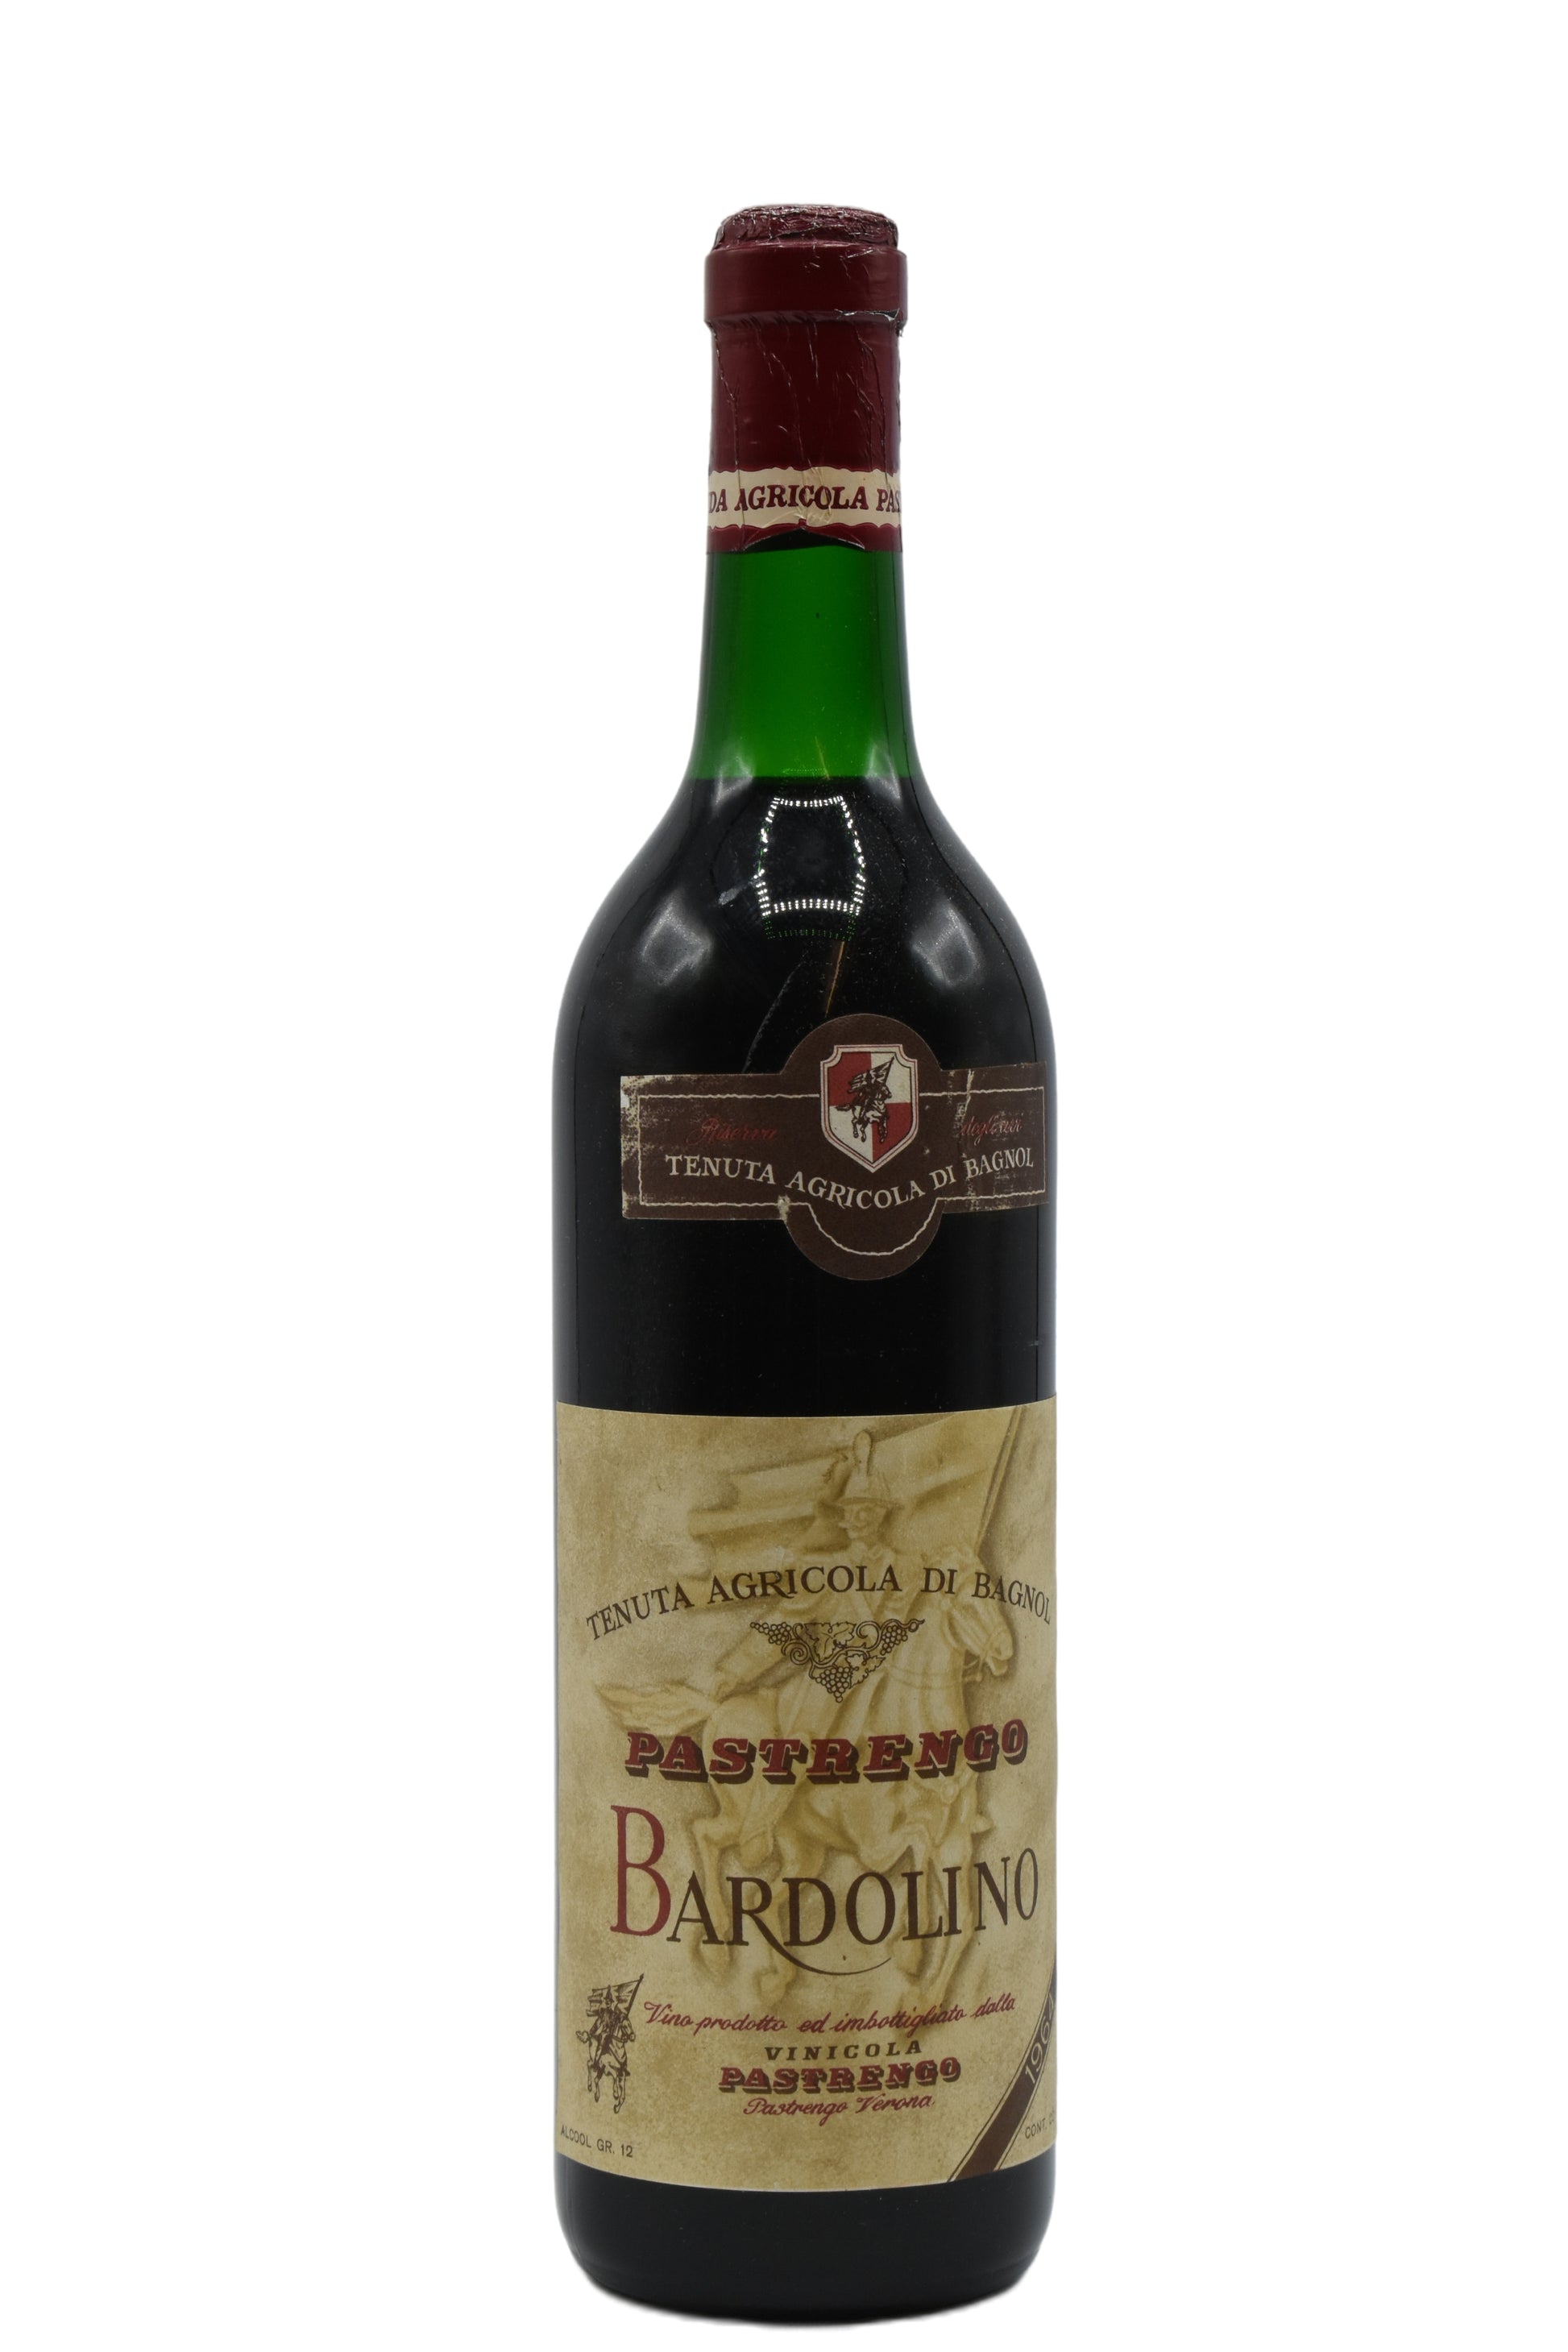 1964 Vinicola Pastrengo, Bardolino Riserva 750ml - Walker Wine Co.